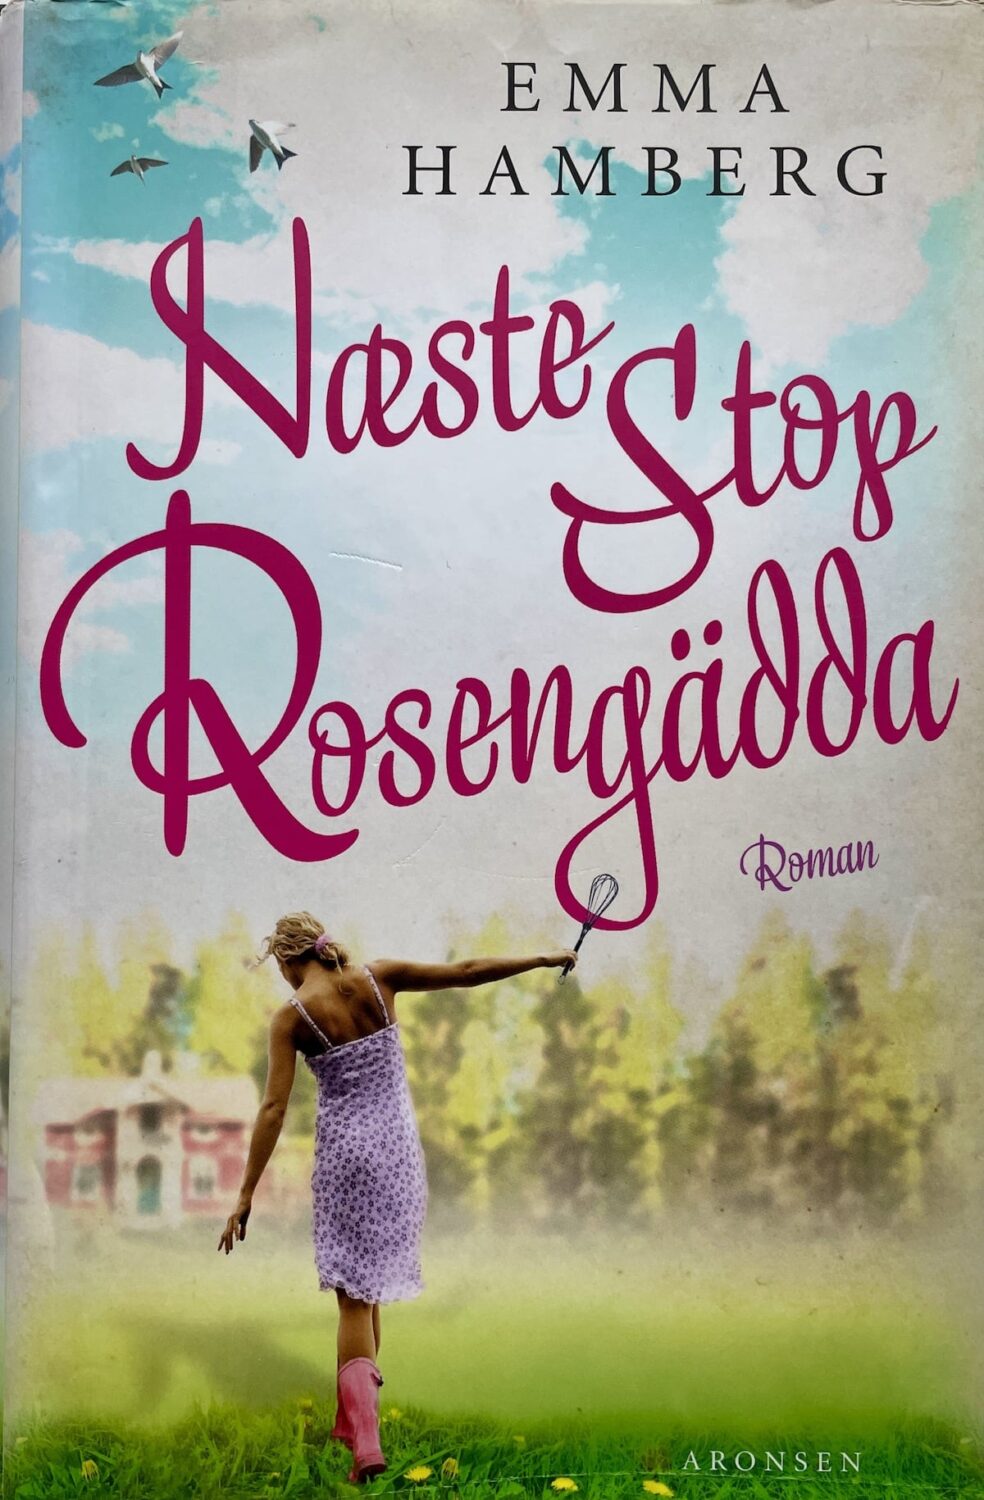 Næste stop Rosengädda!., Emma Hamberg, brugt bog